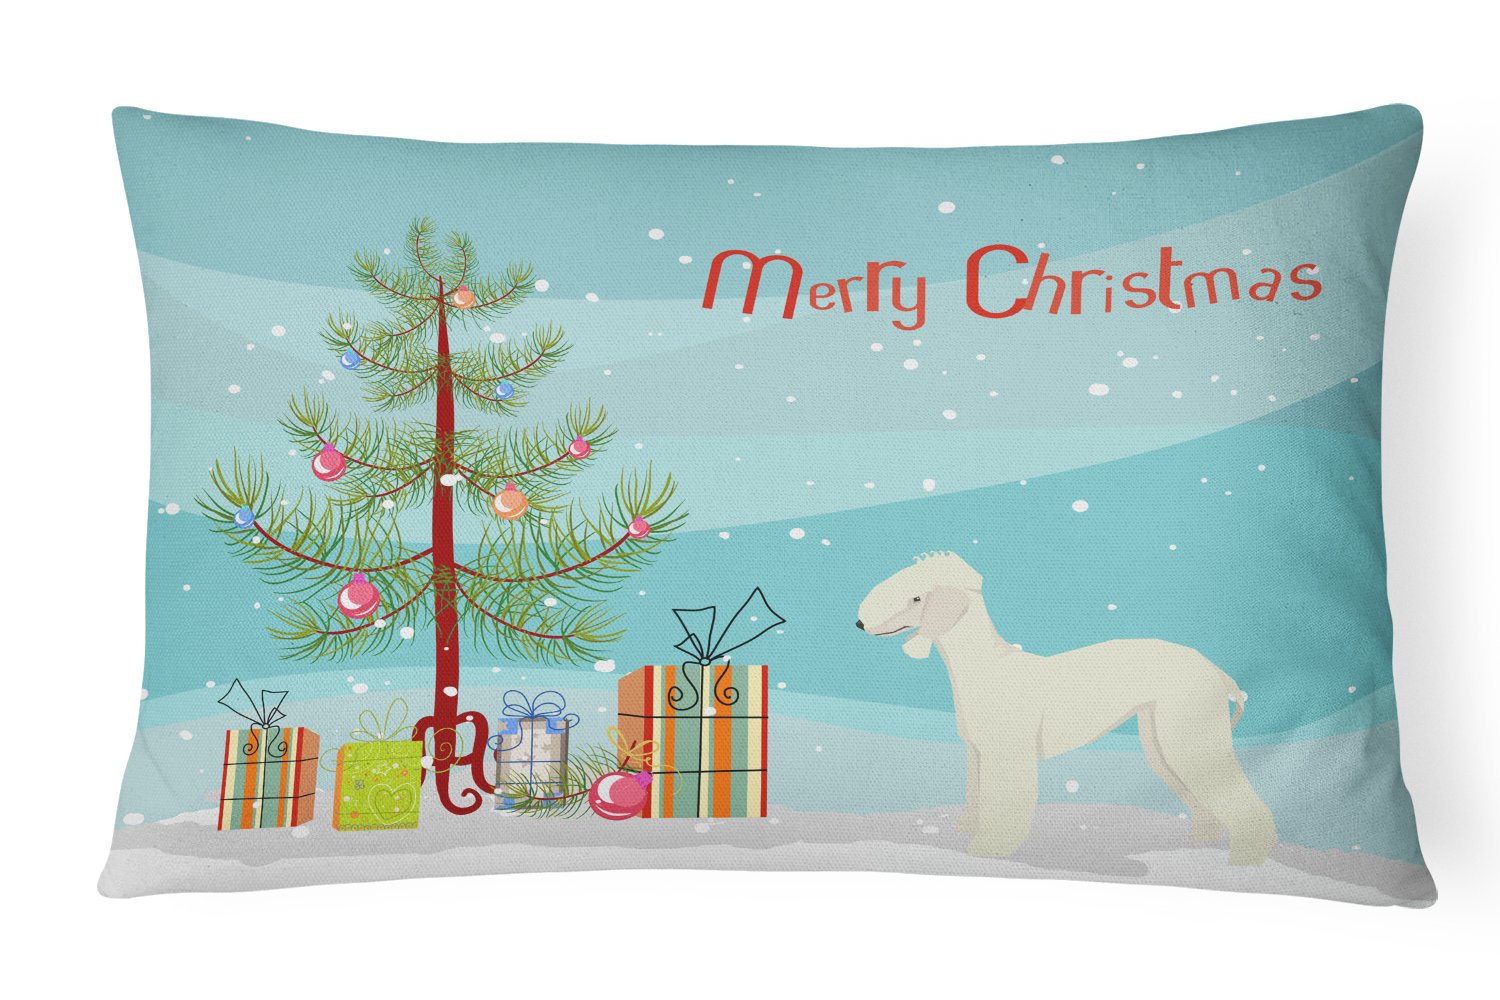 Bedlington Terrier Christmas Tree Canvas Fabric Decorative Pillow CK3520PW1216 by Caroline's Treasures